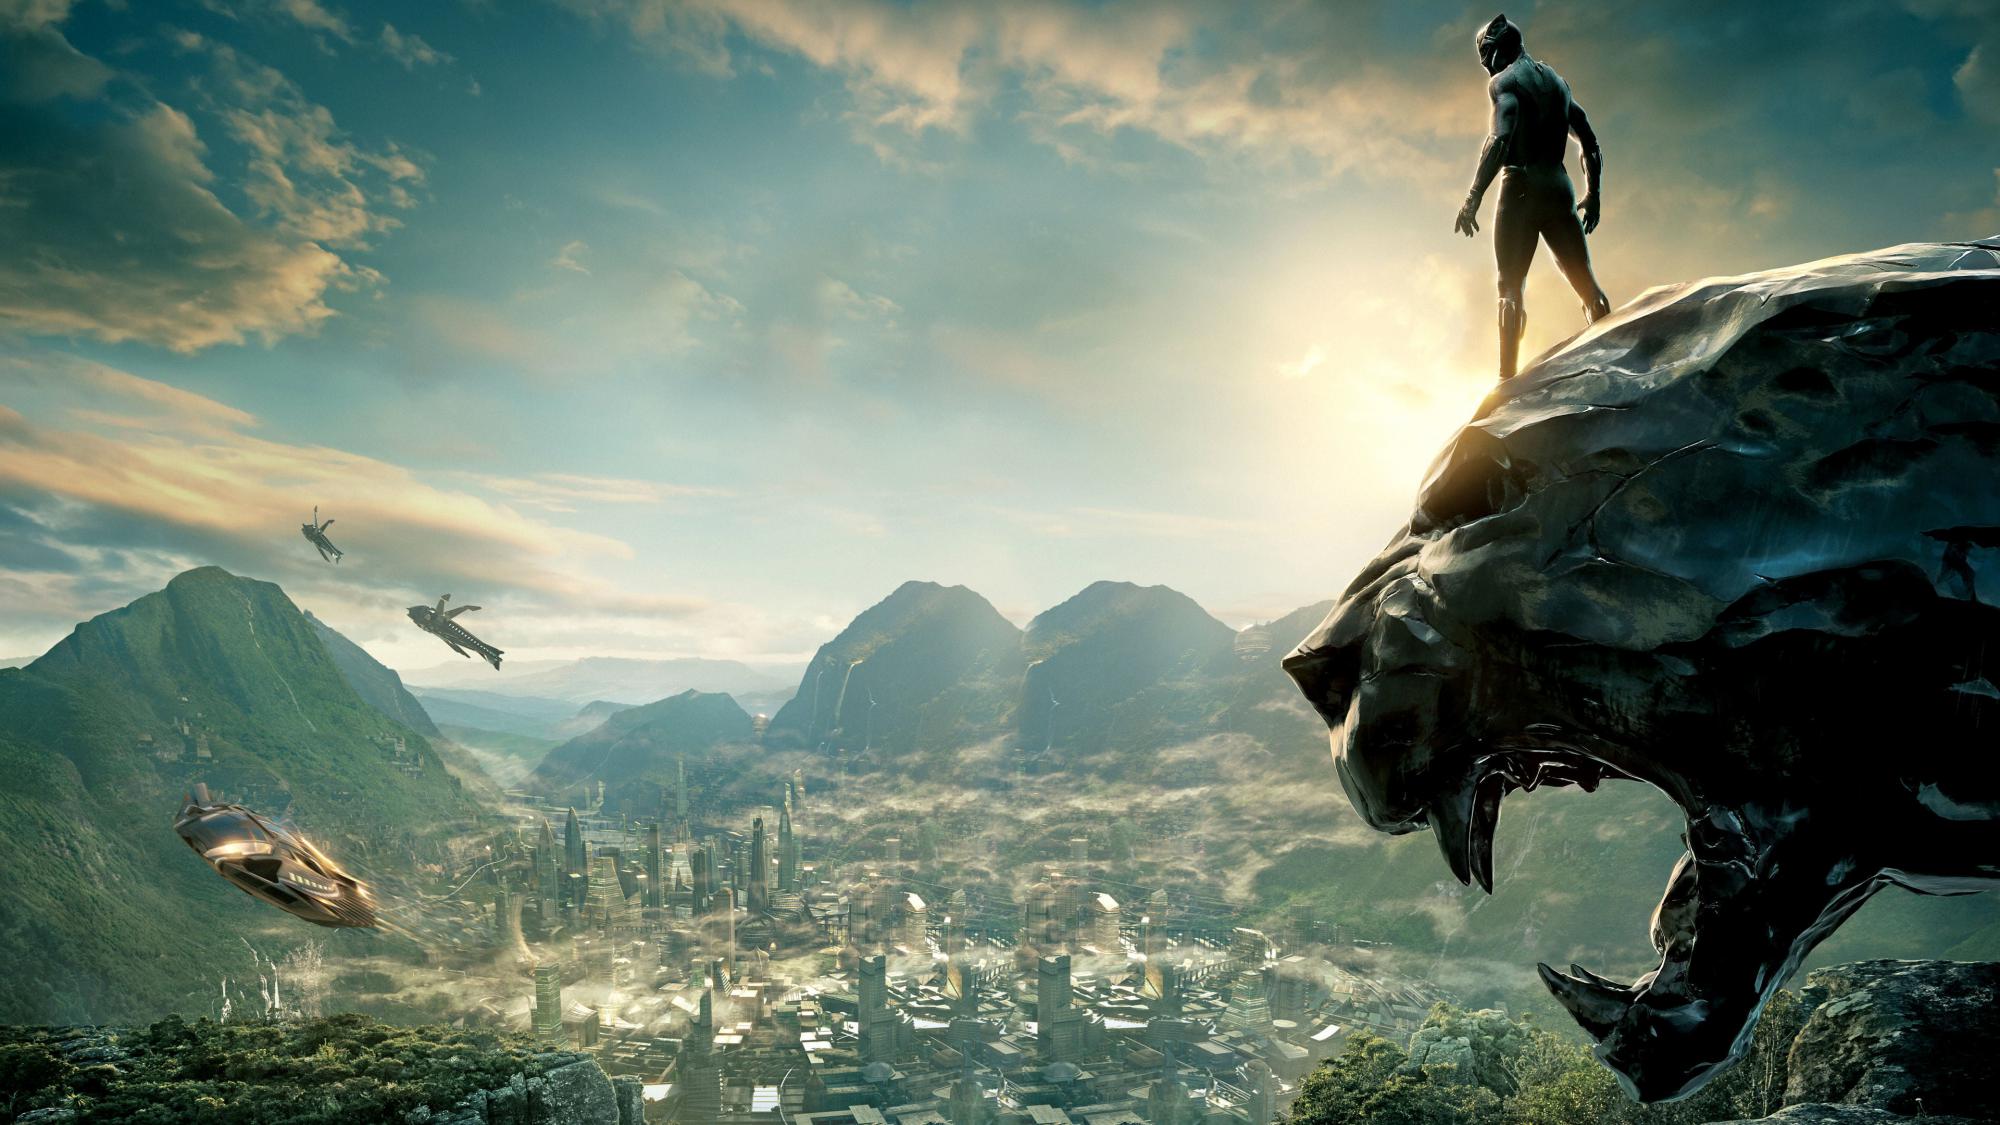 Backdrop Image for Black Panther